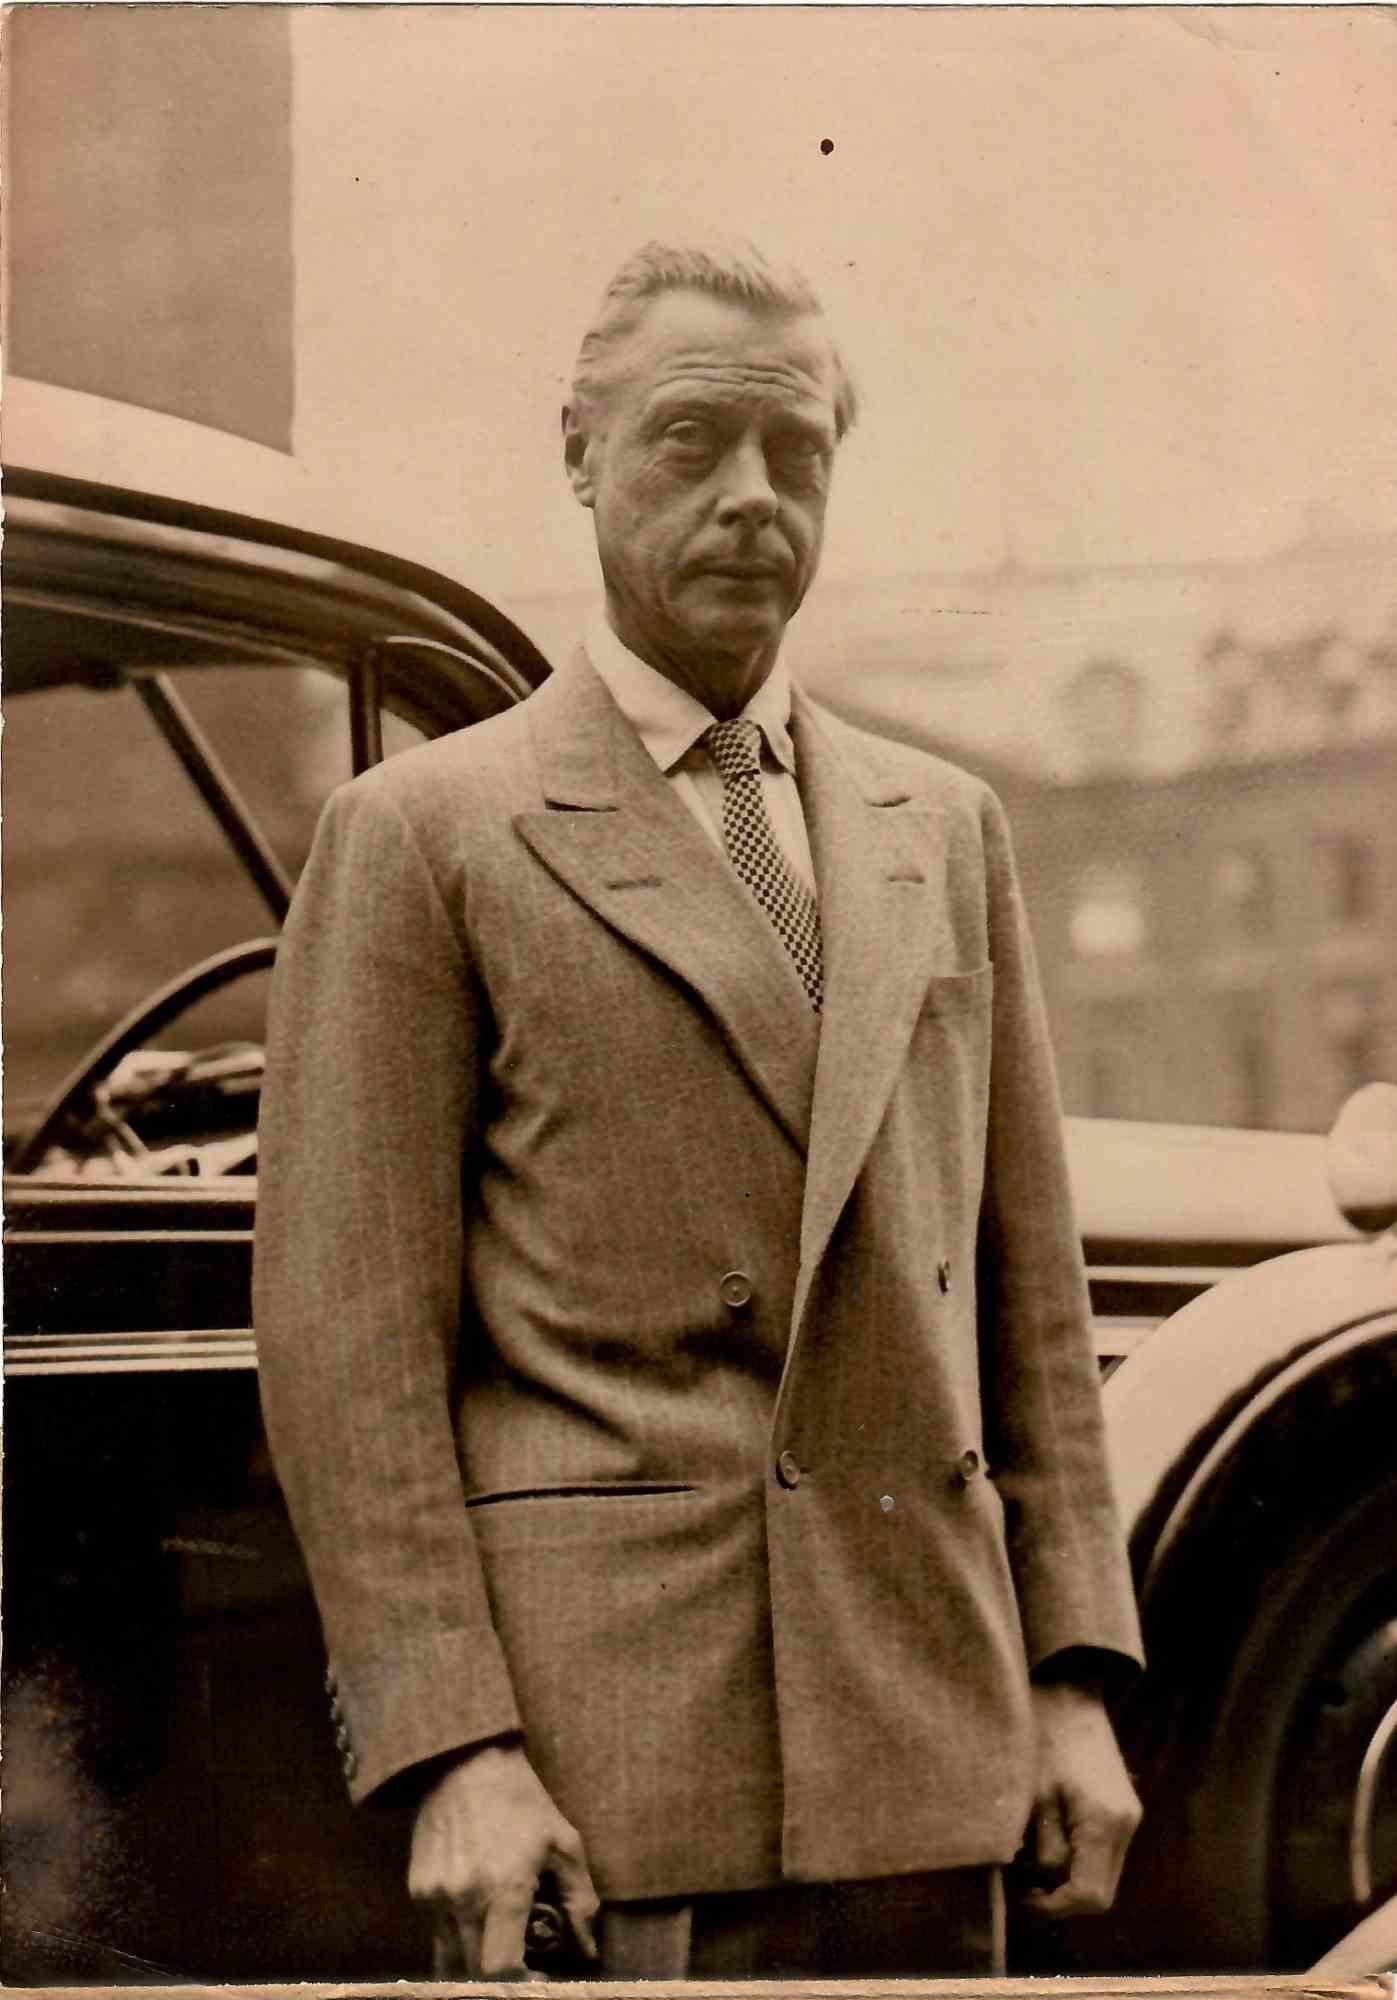 Unknown Portrait Photograph - The Duke of Windsor in Paris - Vintage B/W photo - 1950s